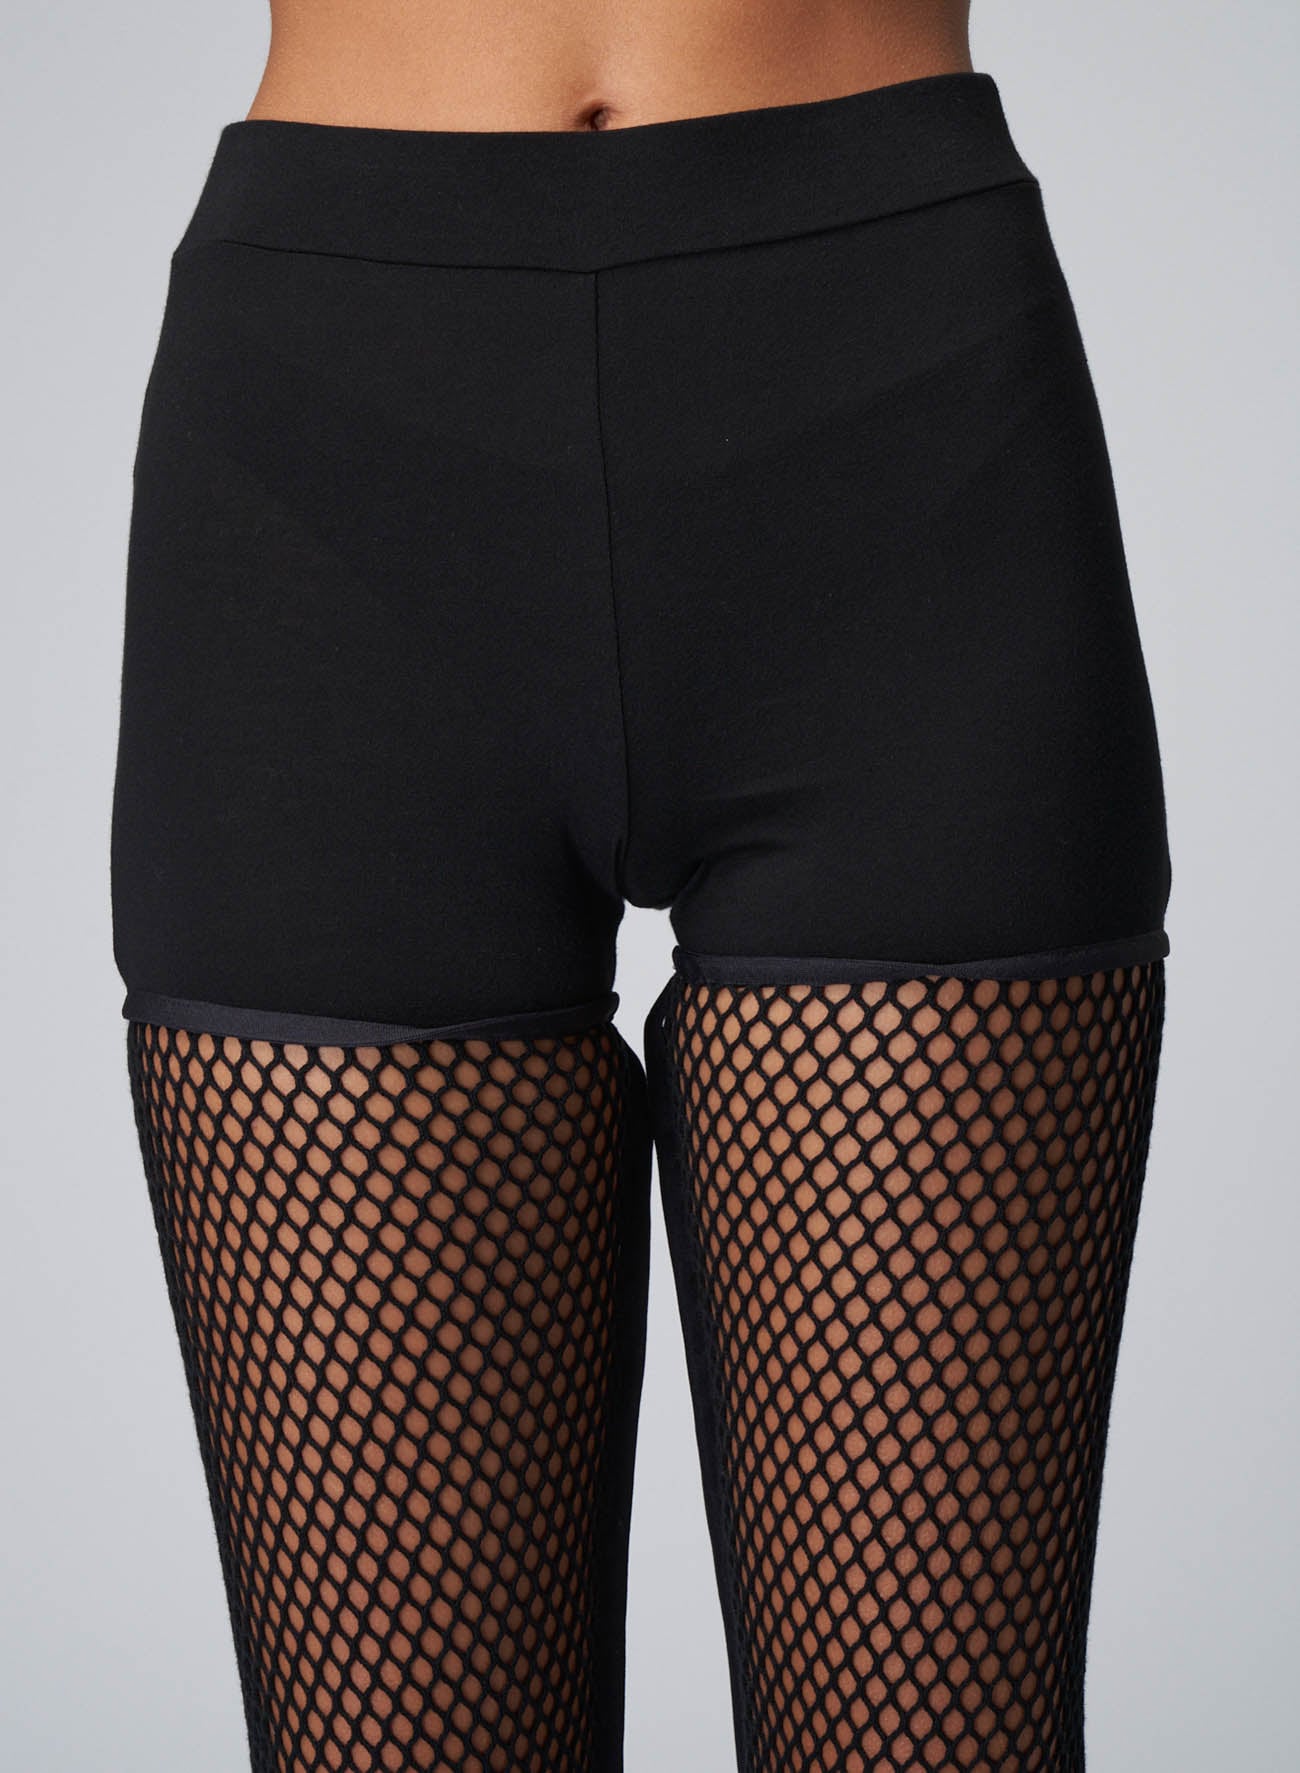 Women's Fishnet Shorts Mesh See Through Leggings Sports Short Hot Pants |  eBay